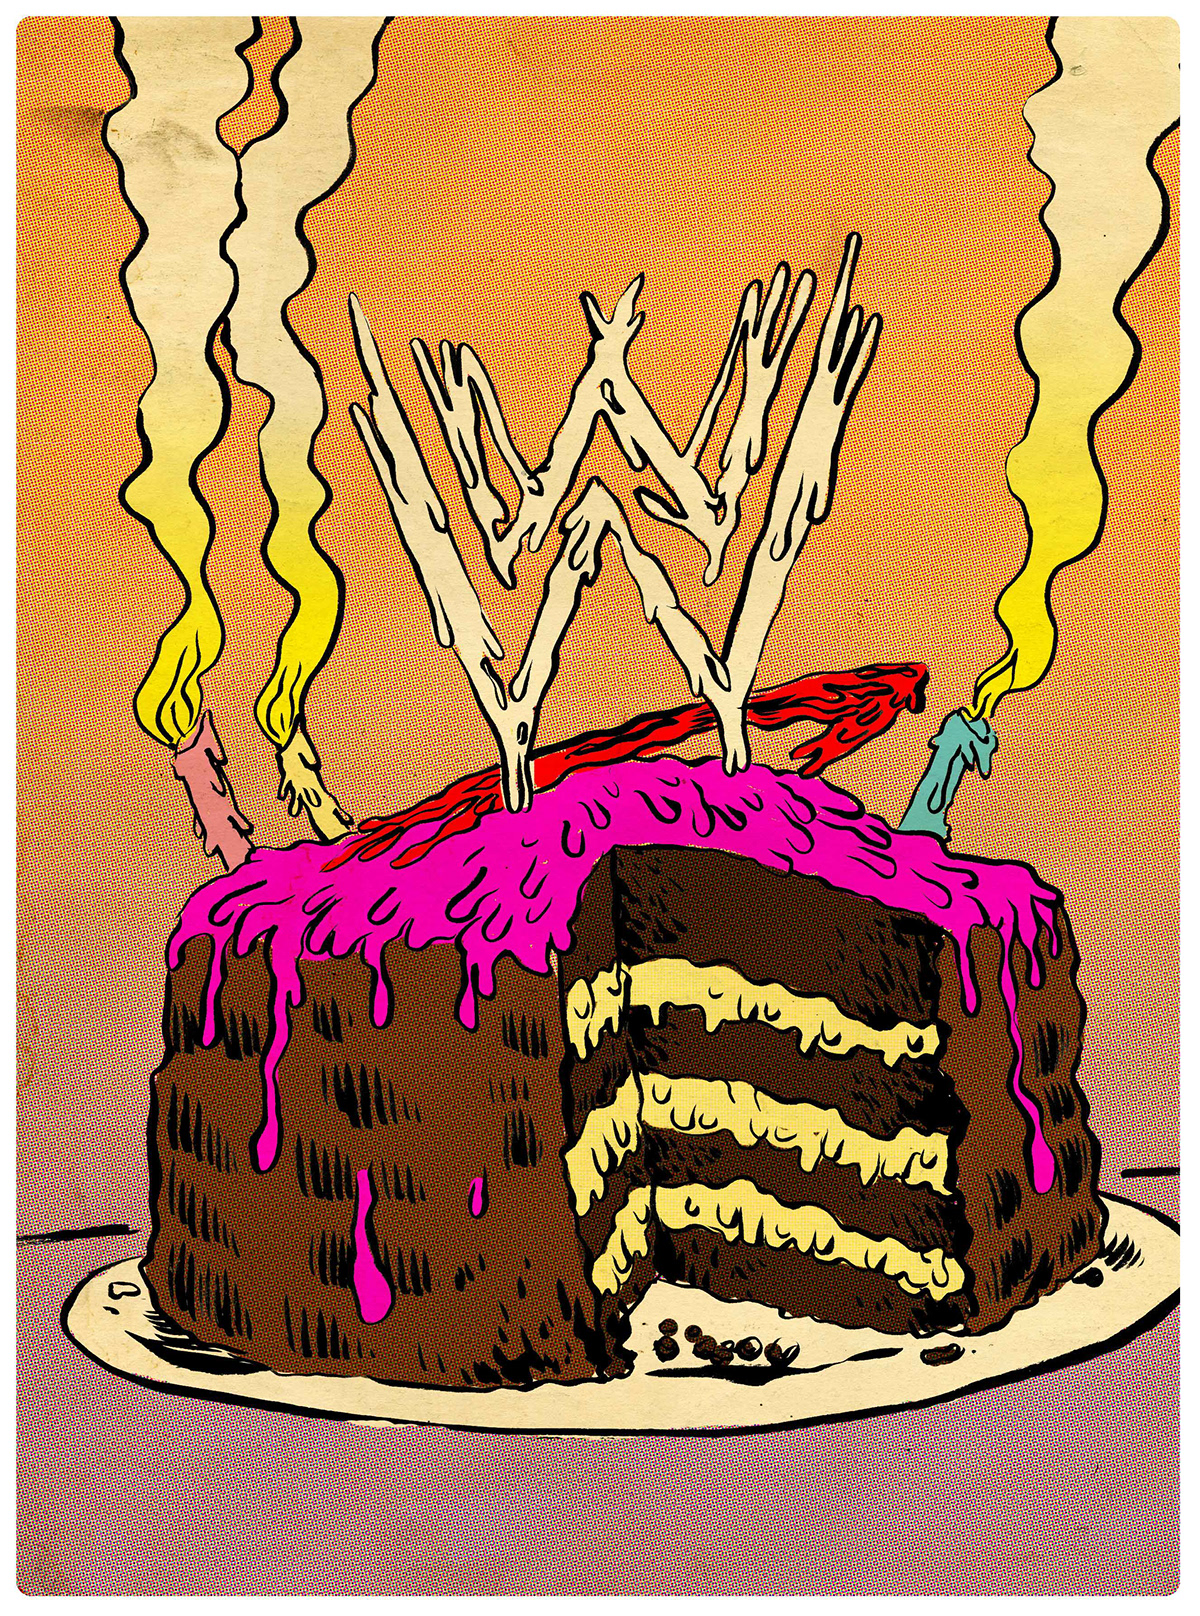 WWE Wrestling comics magazine